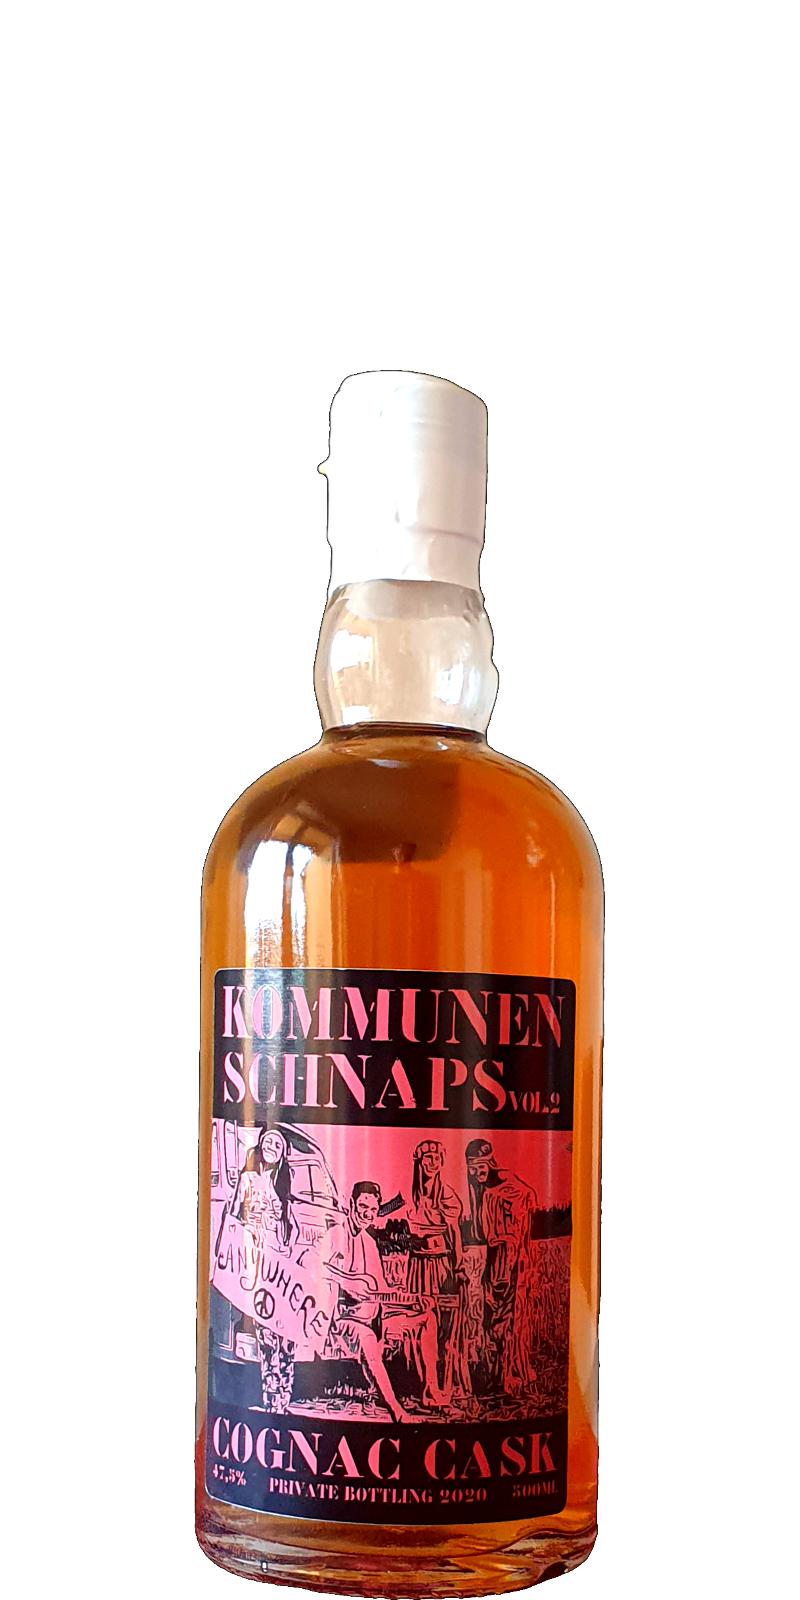 Kommunen Schnaps Private Bottling 2020 UD Cognac Cask 47.5% 500ml